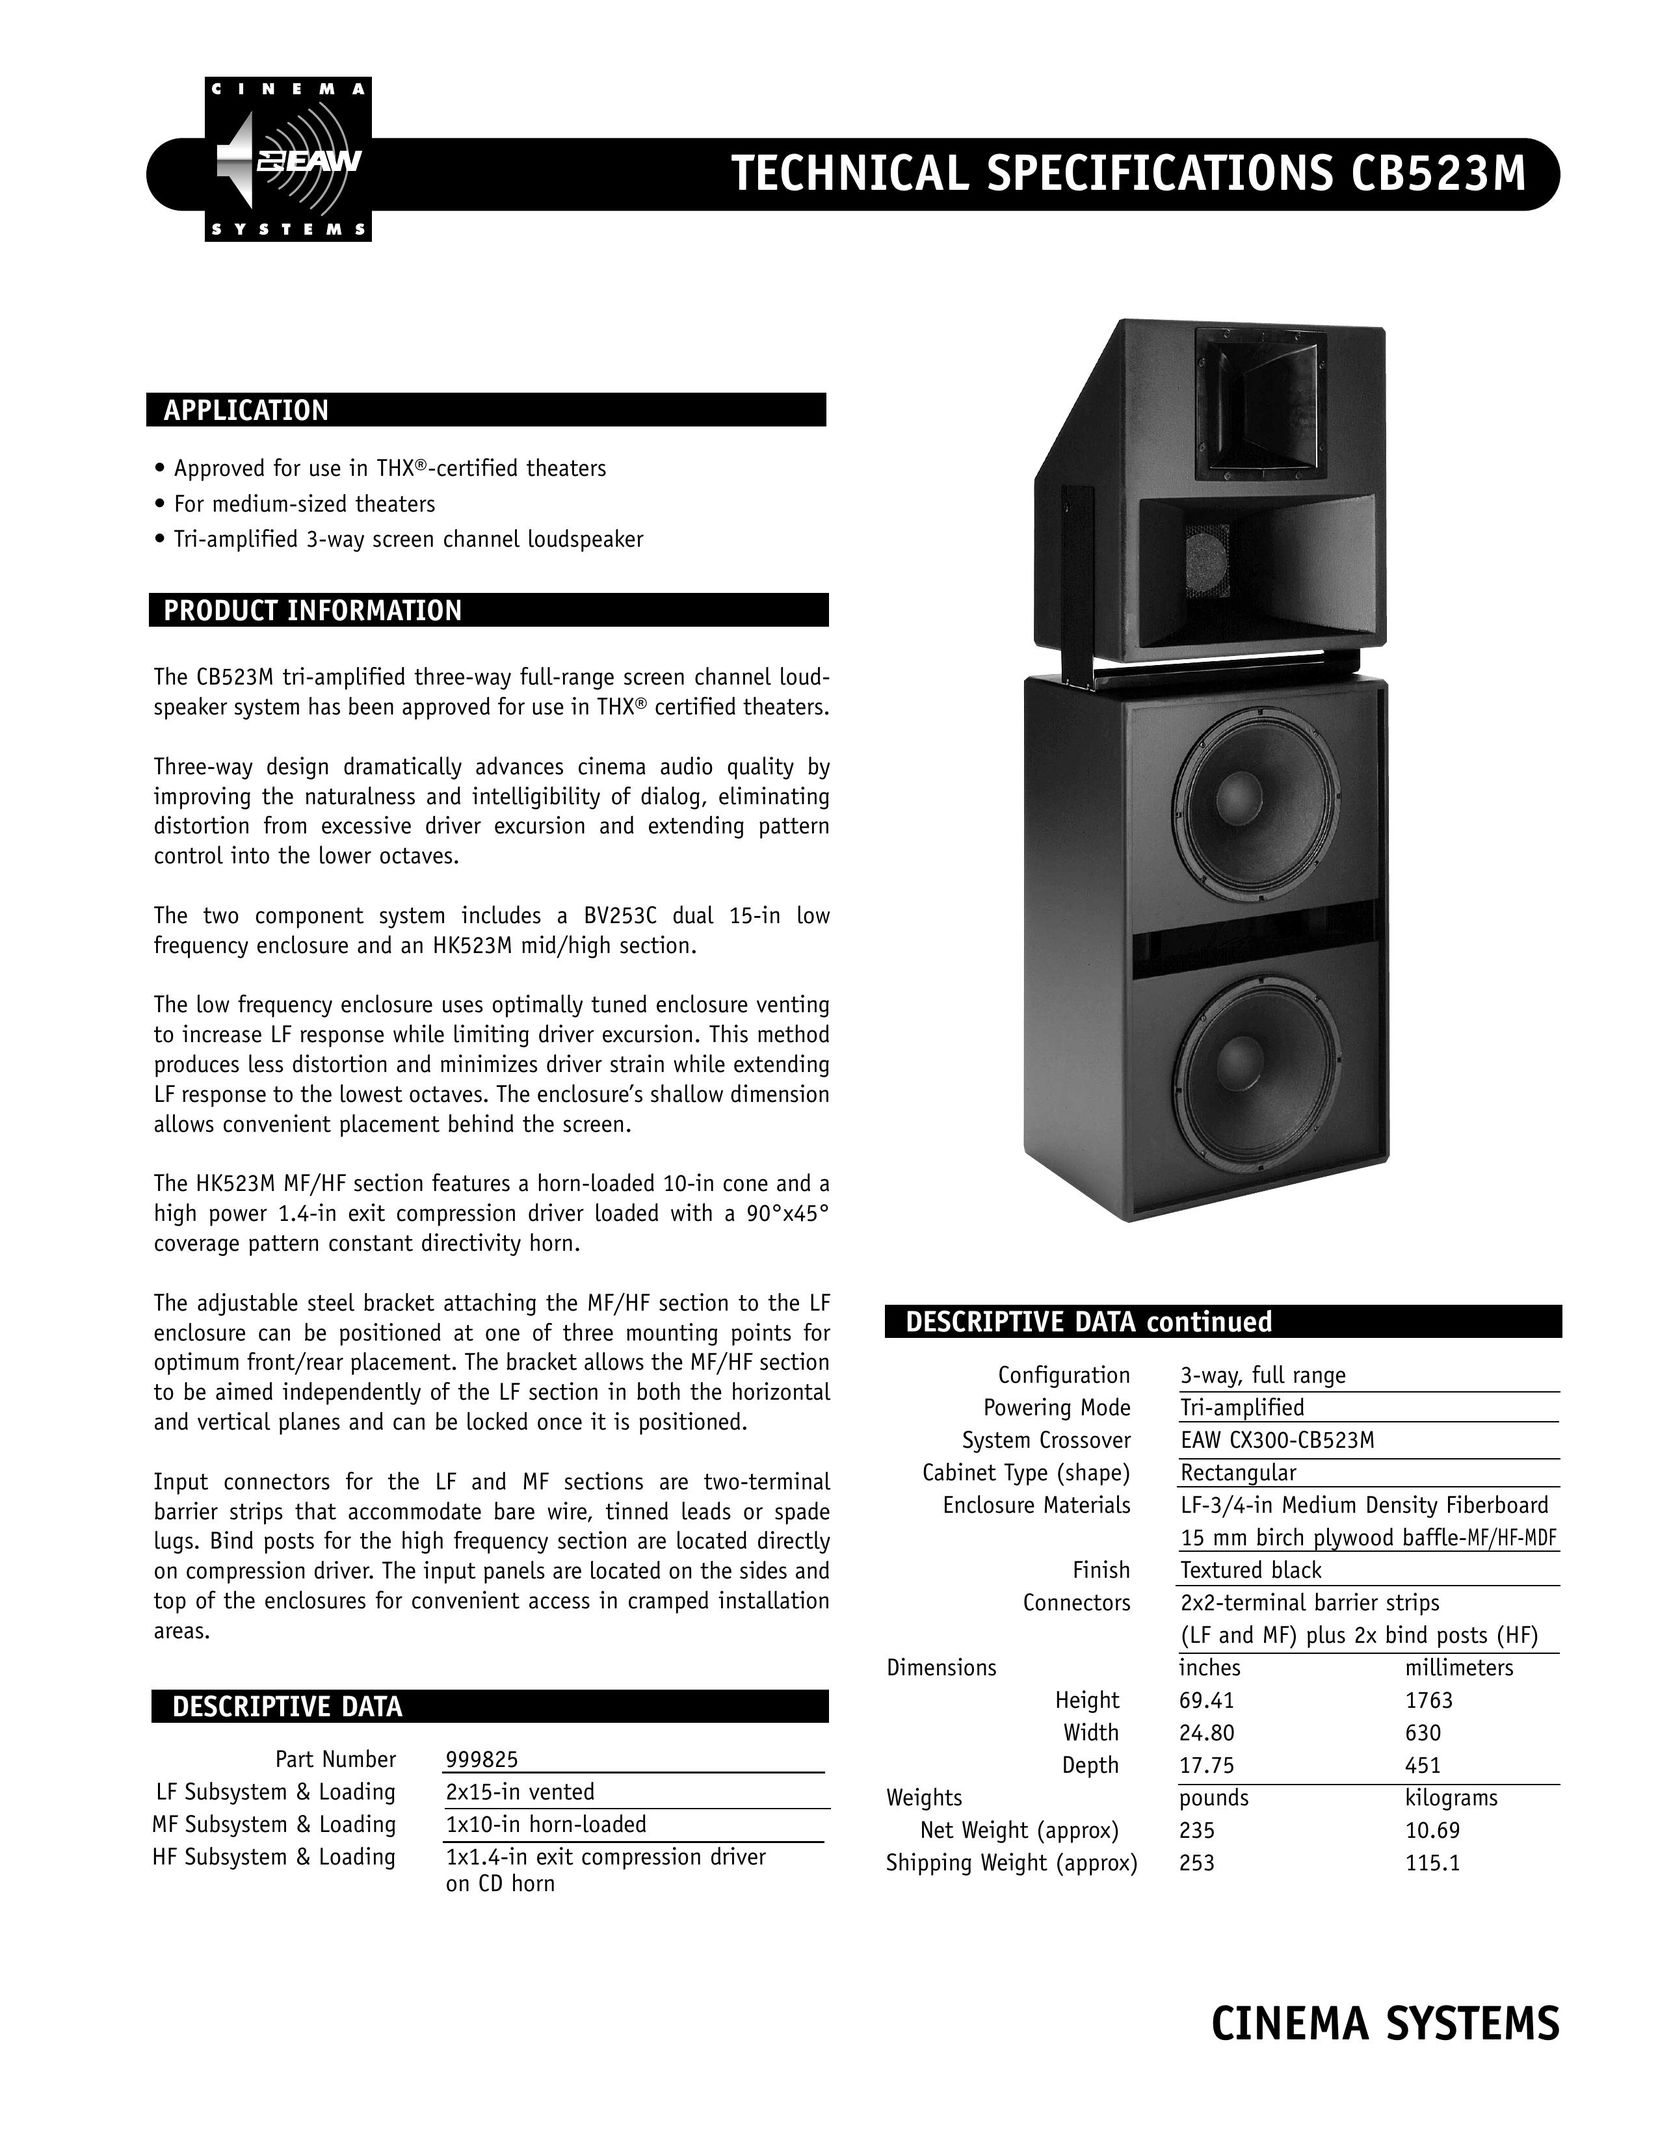 EAW CB523M Portable Speaker User Manual